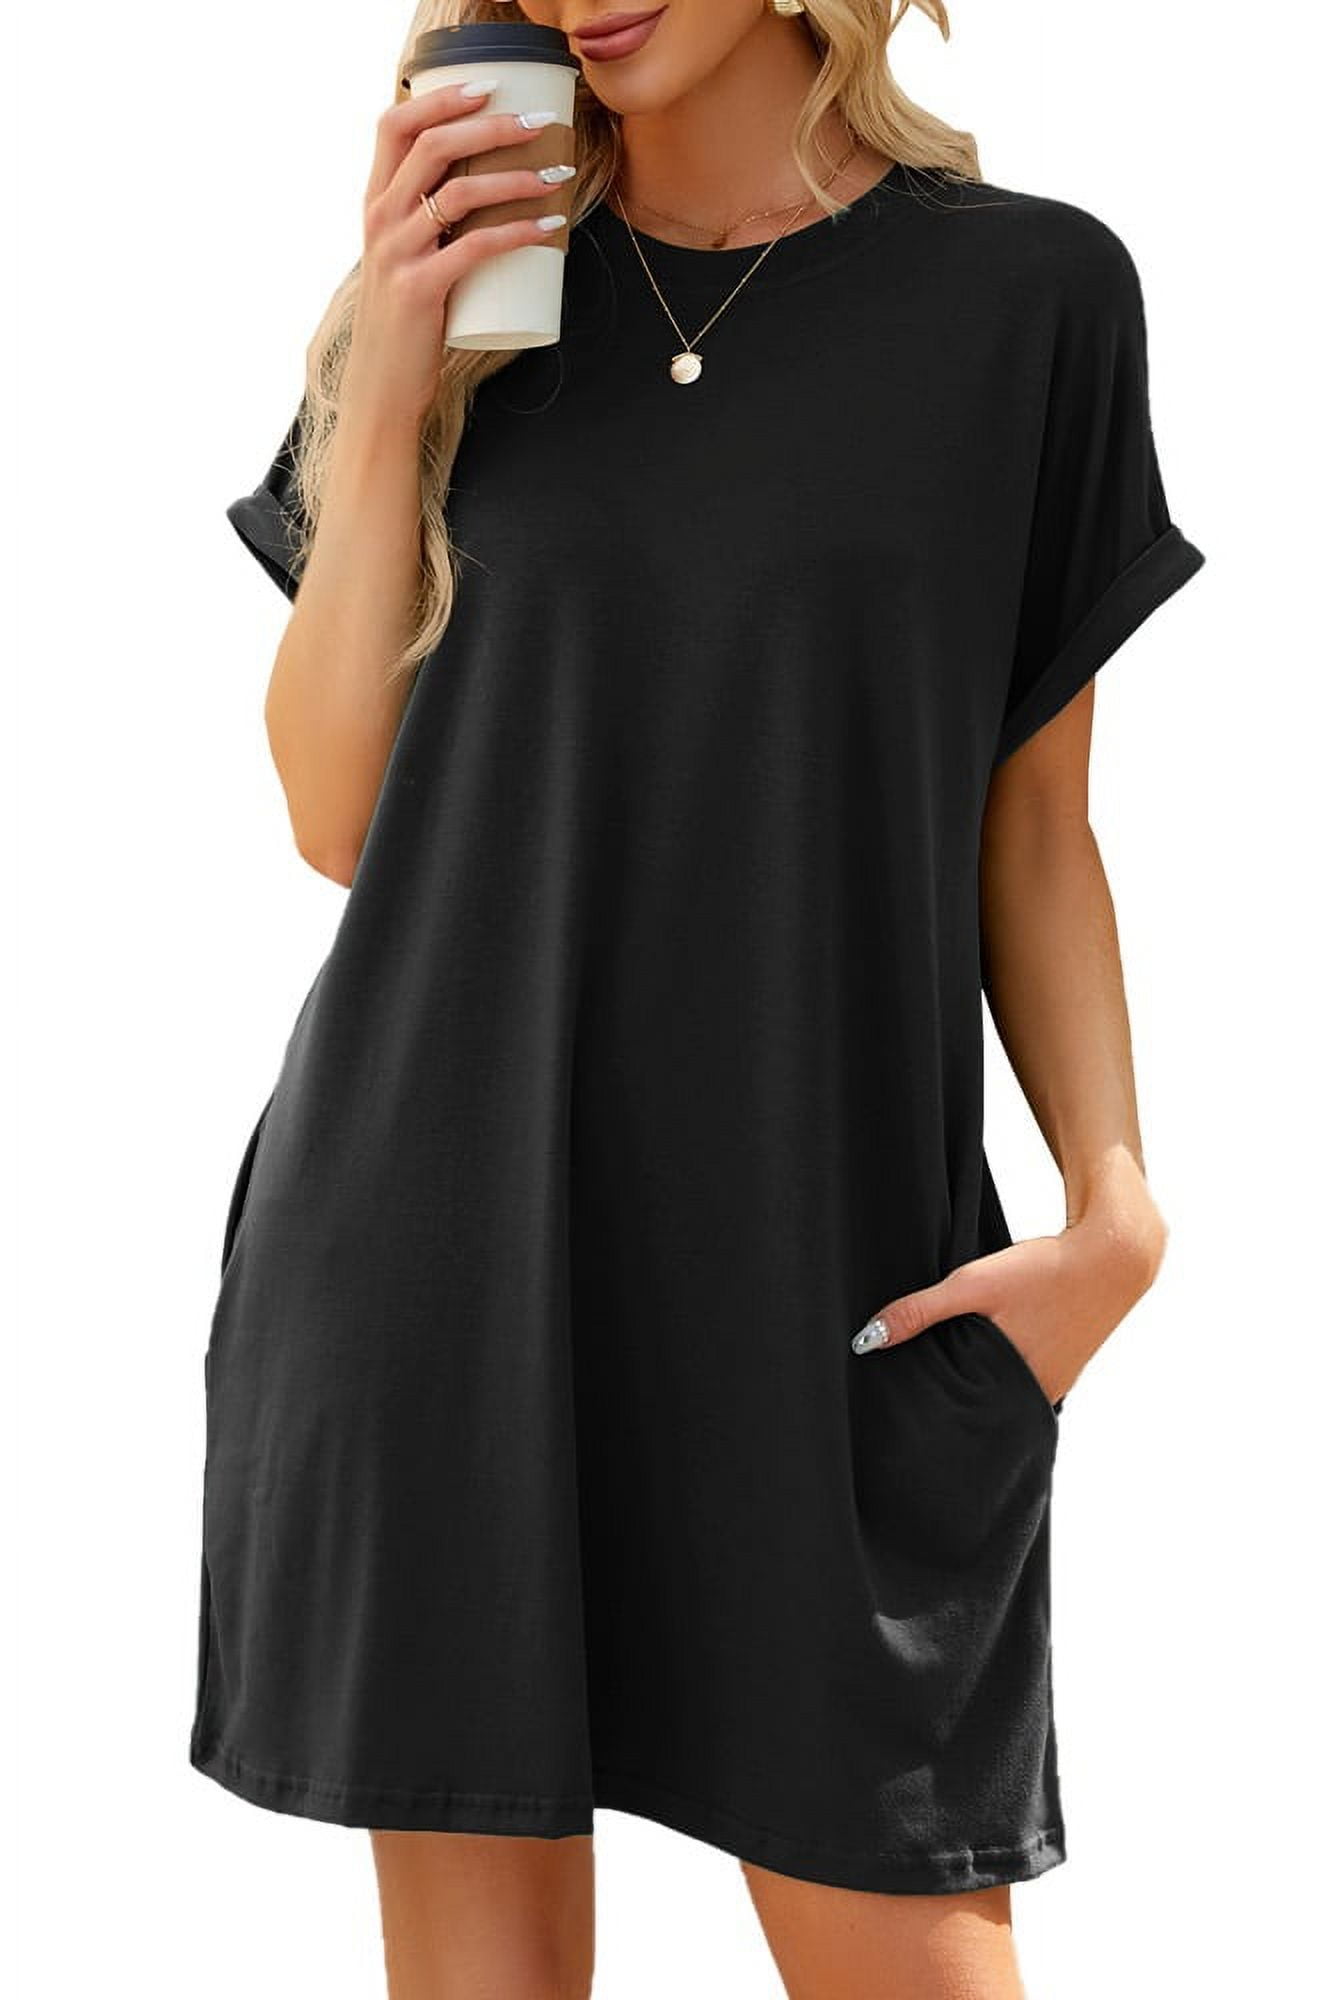 MOLERANI Women's Casual Swing Simple T-shirt Loose Dress, Small, long Sleeve  Black : Buy Online at Best Price in KSA - Souq is now : Fashion